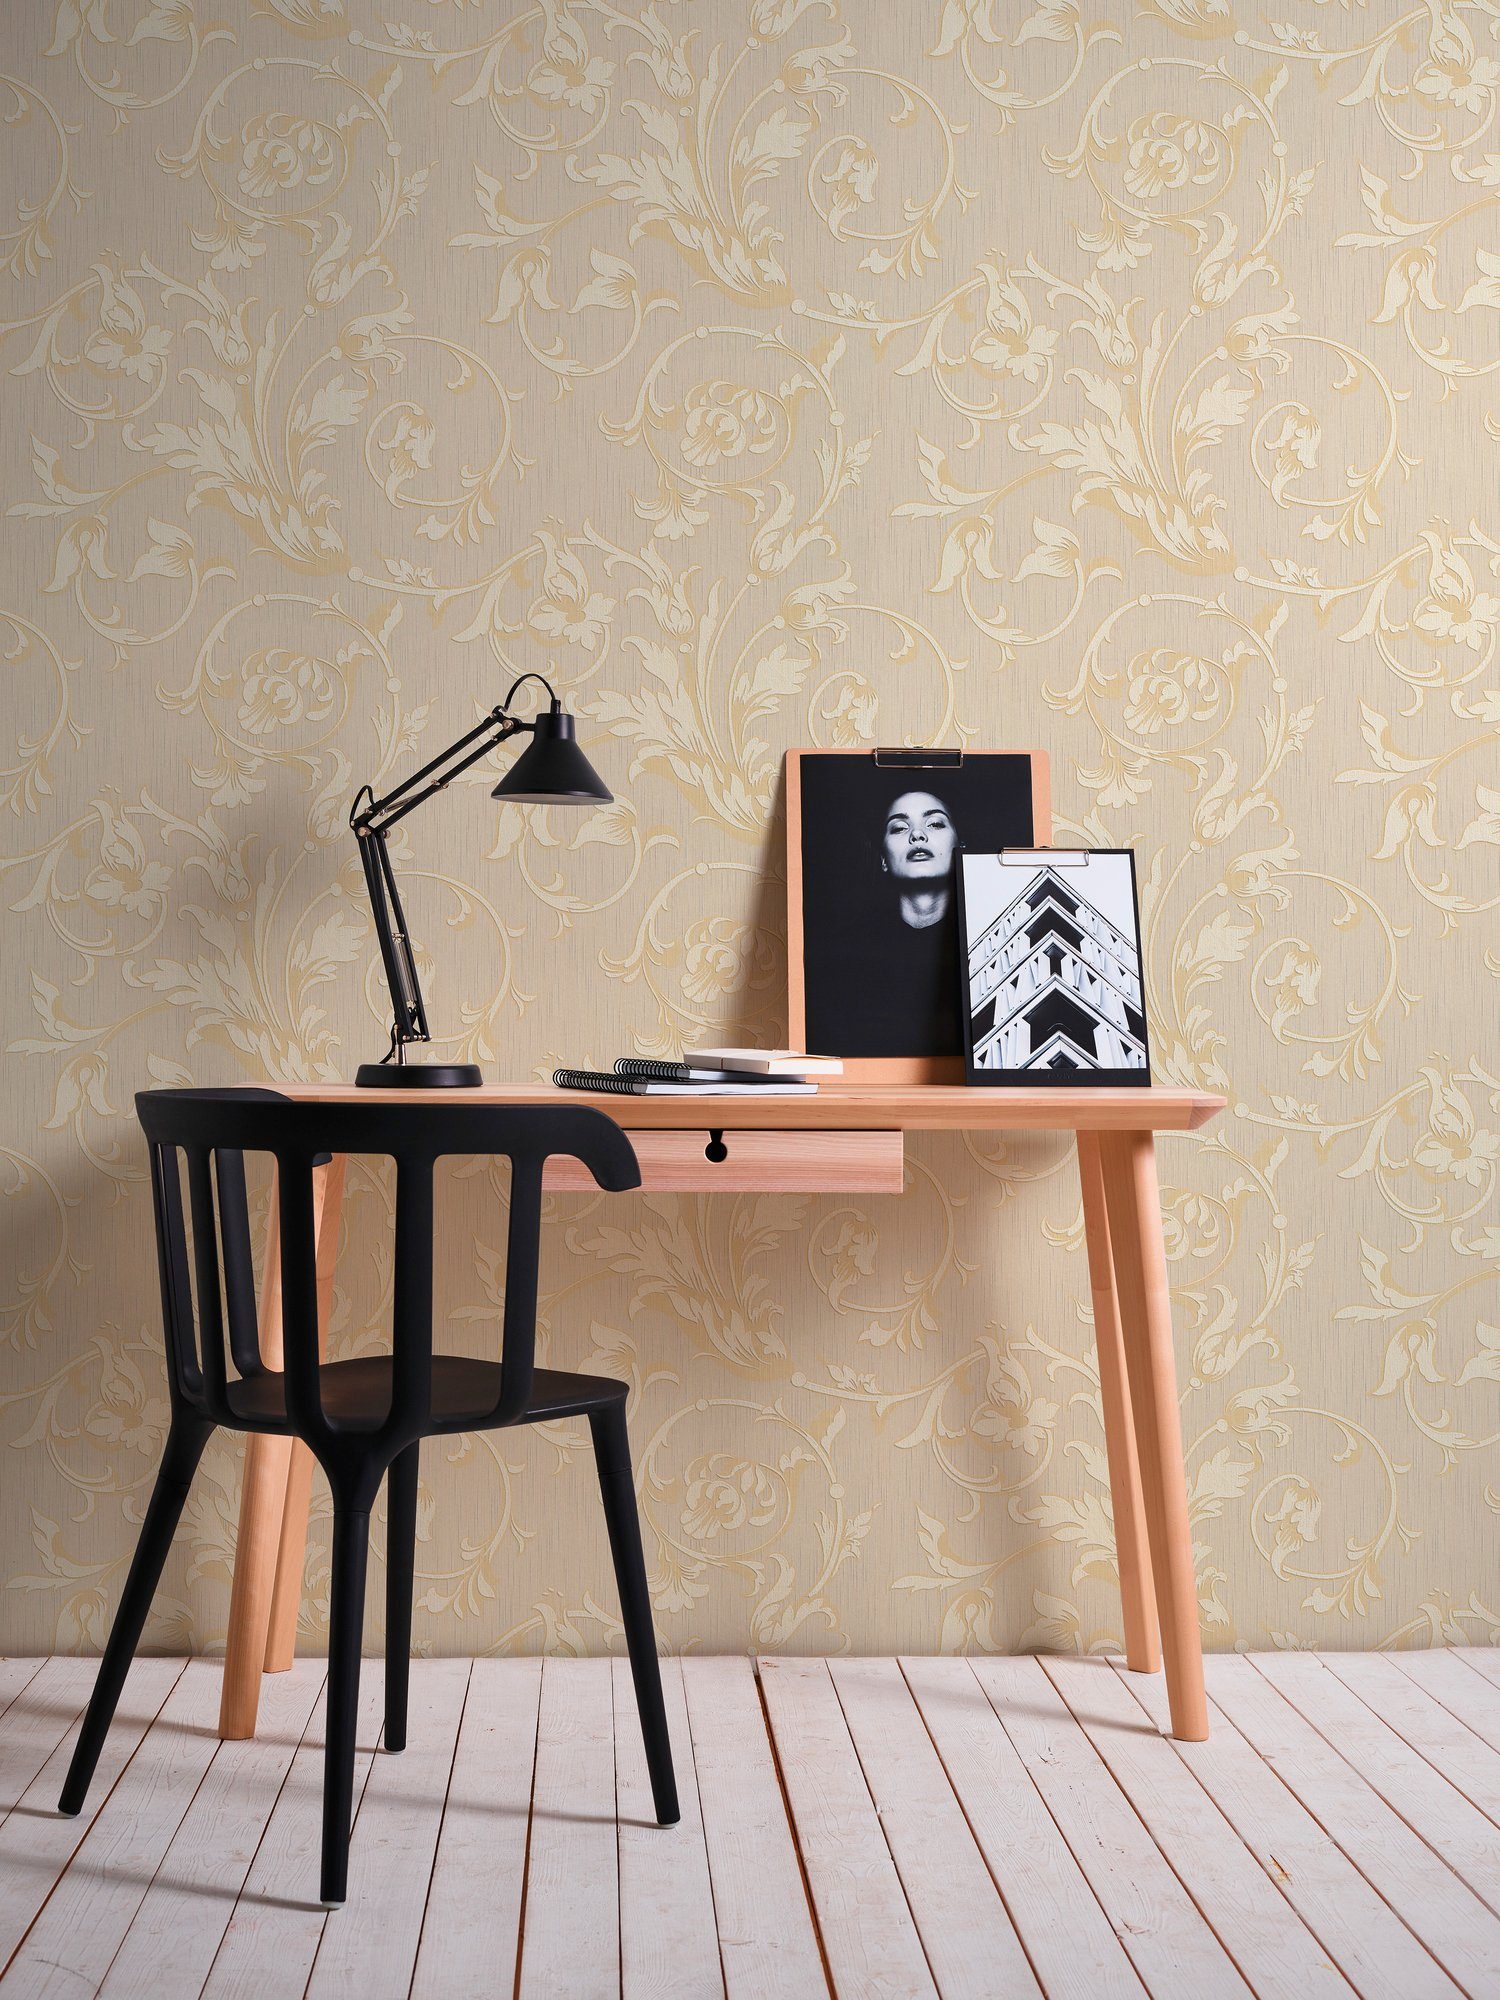 A.S. Tessuto, floral, Textiltapete Tapete Paper samtig, Floral creme/gold/beige Création Barock, Blumen Architects